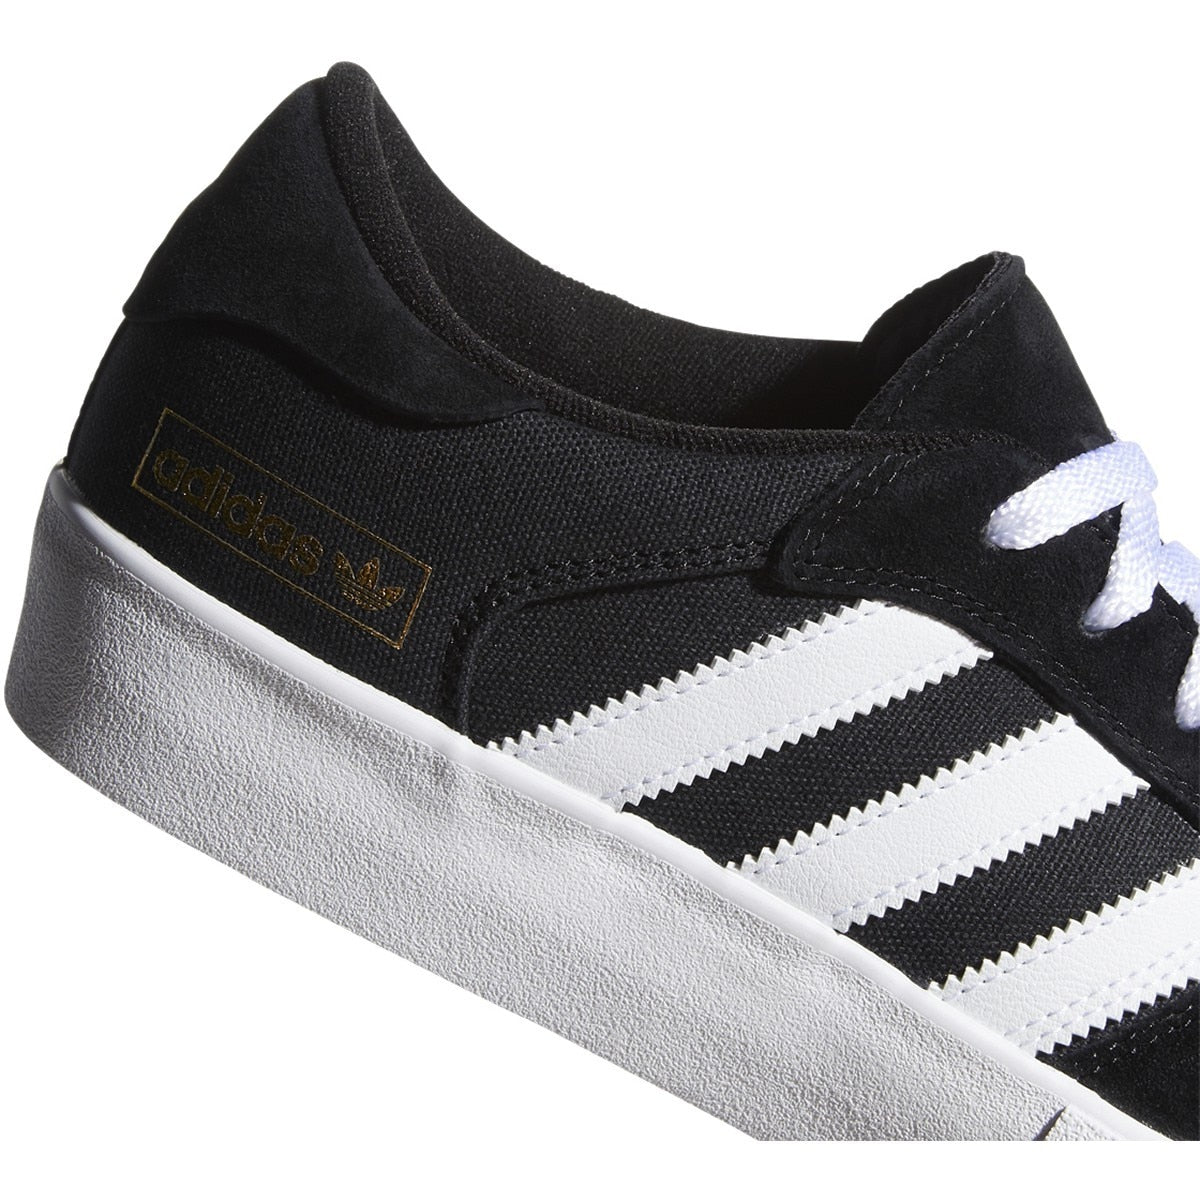 Adidas Matchbreak Super Skate Shoe - Black/White/Gold